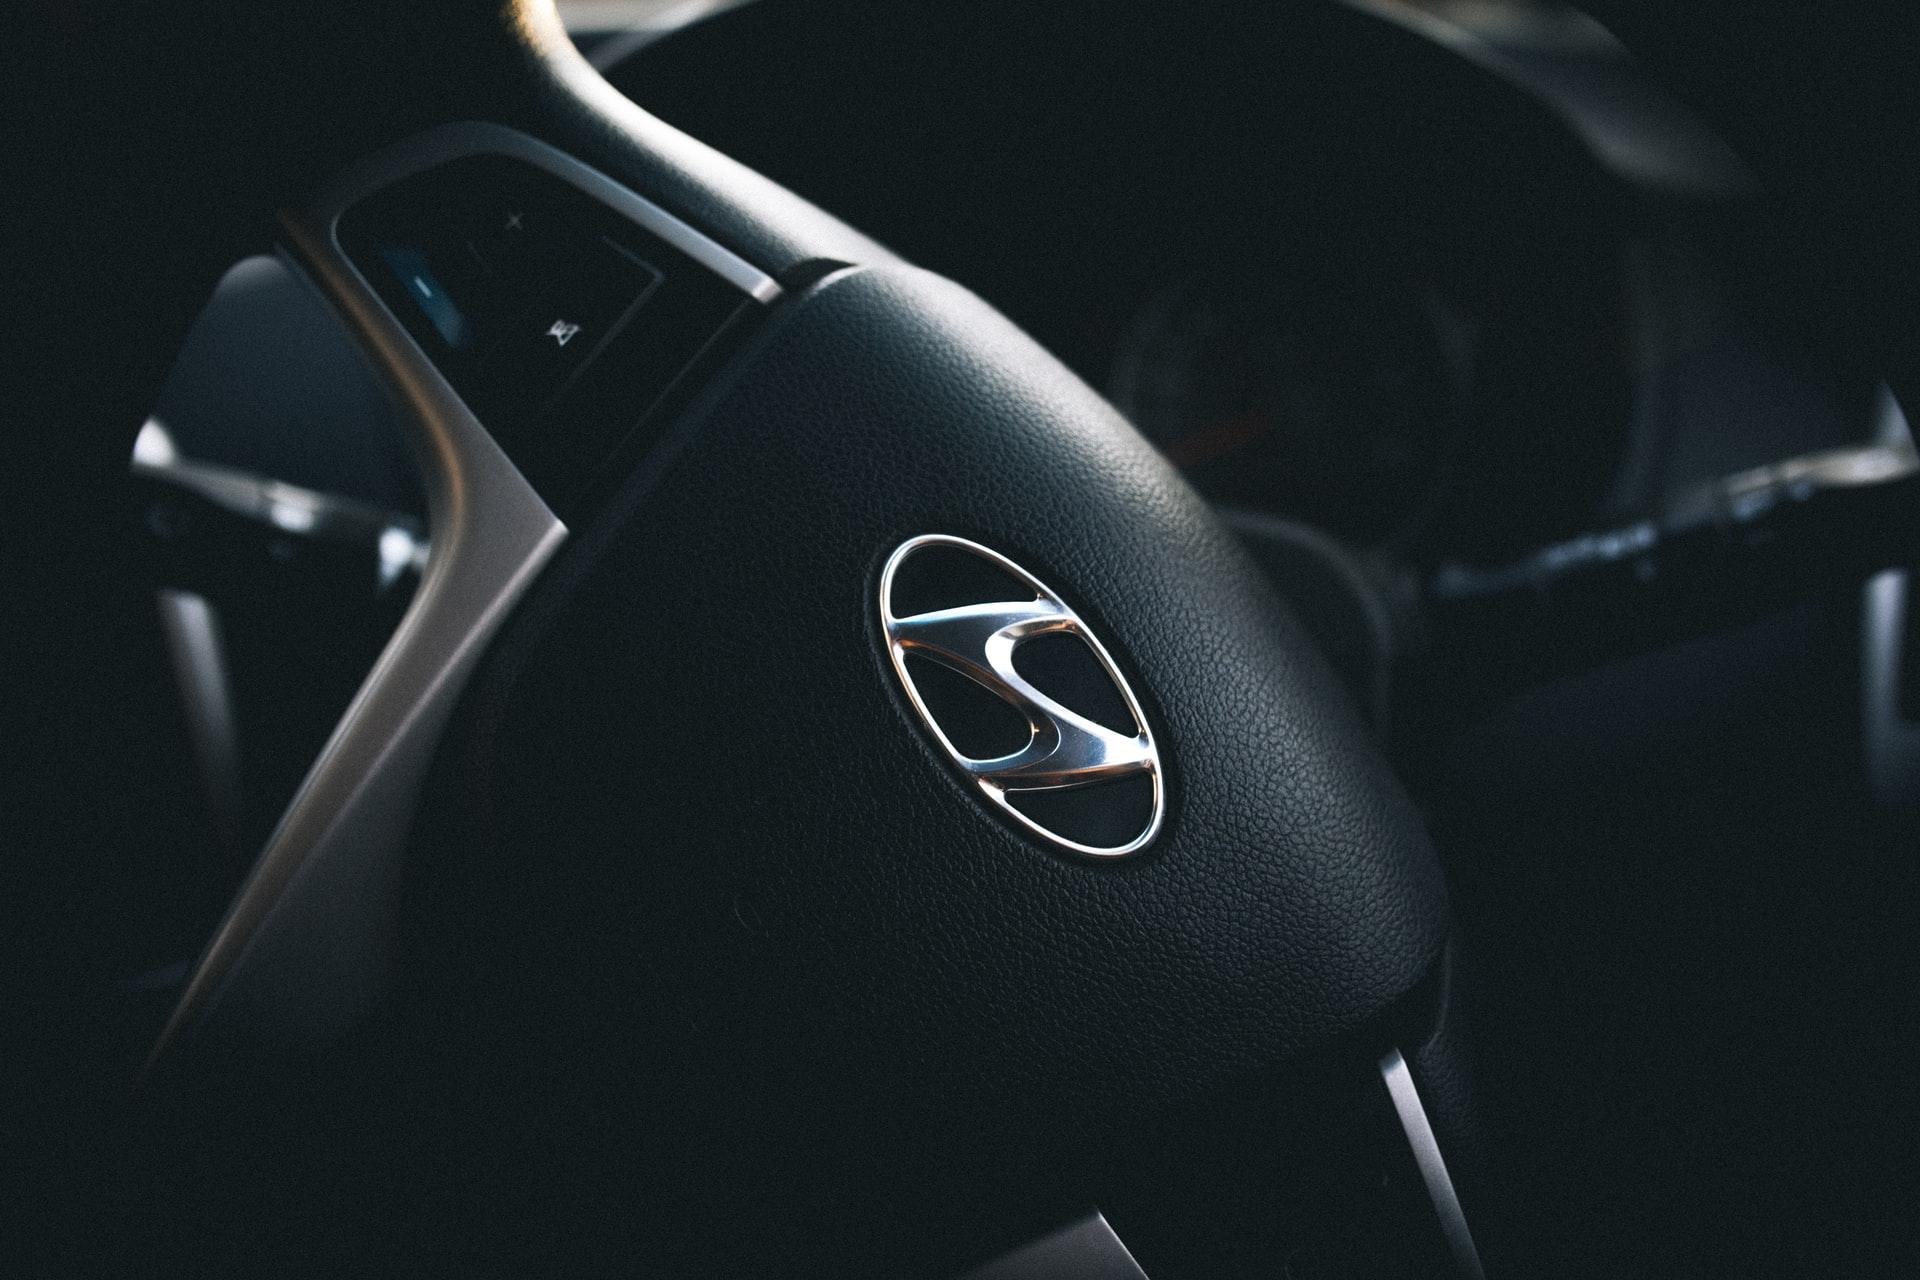 A Hyundai logo on the steering wheel of car.